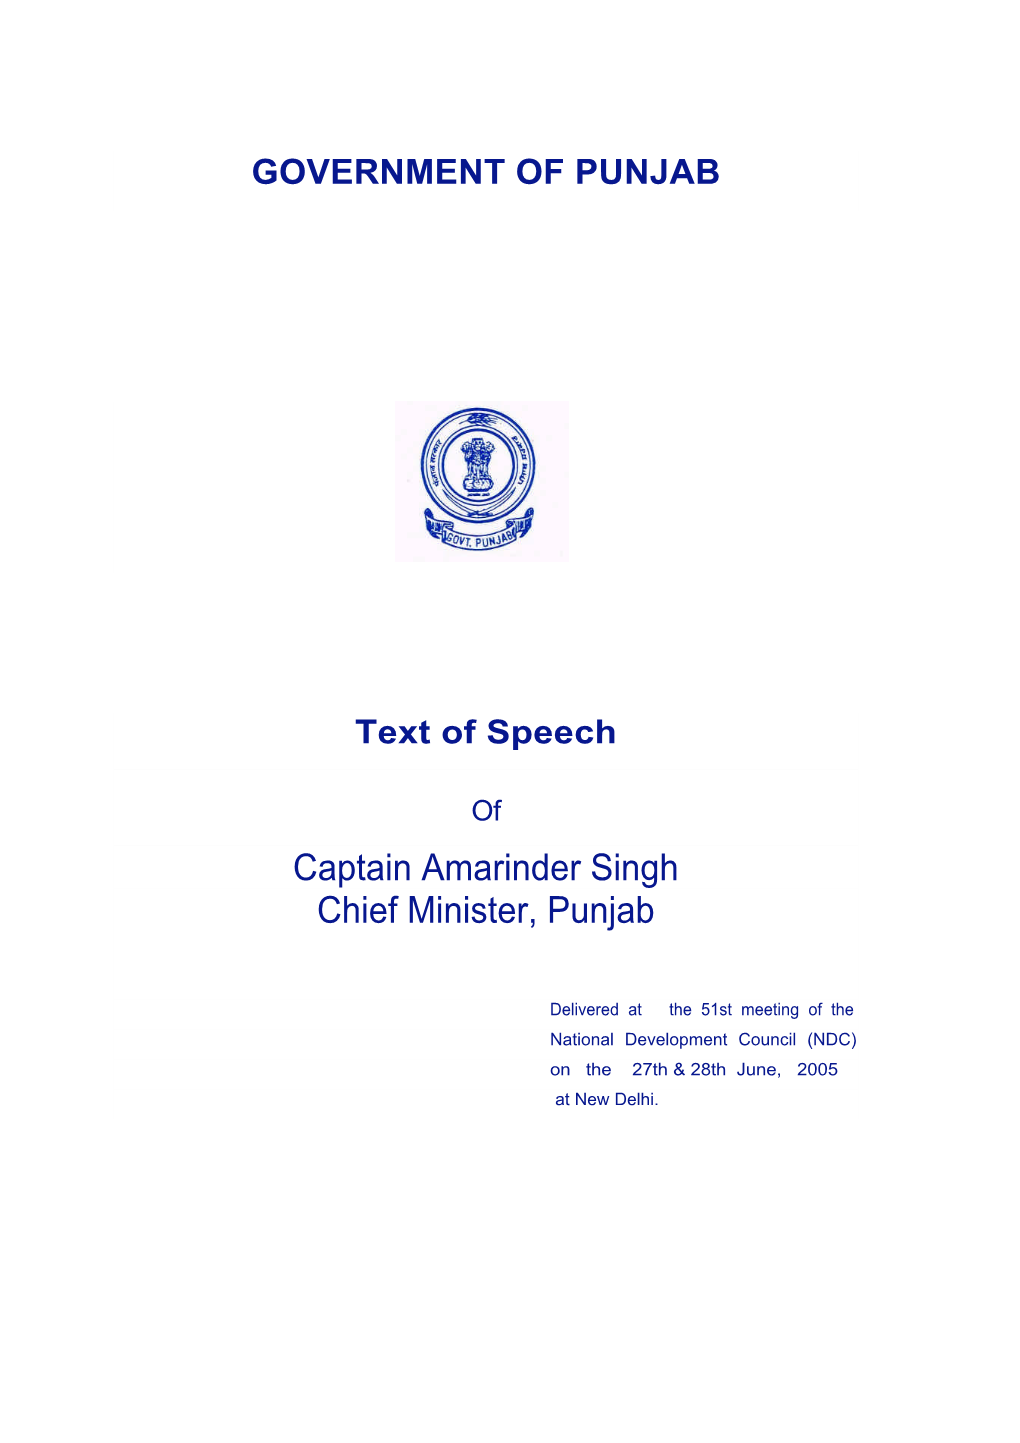 Captain Amarinder Singh Chief Minister, Punjab